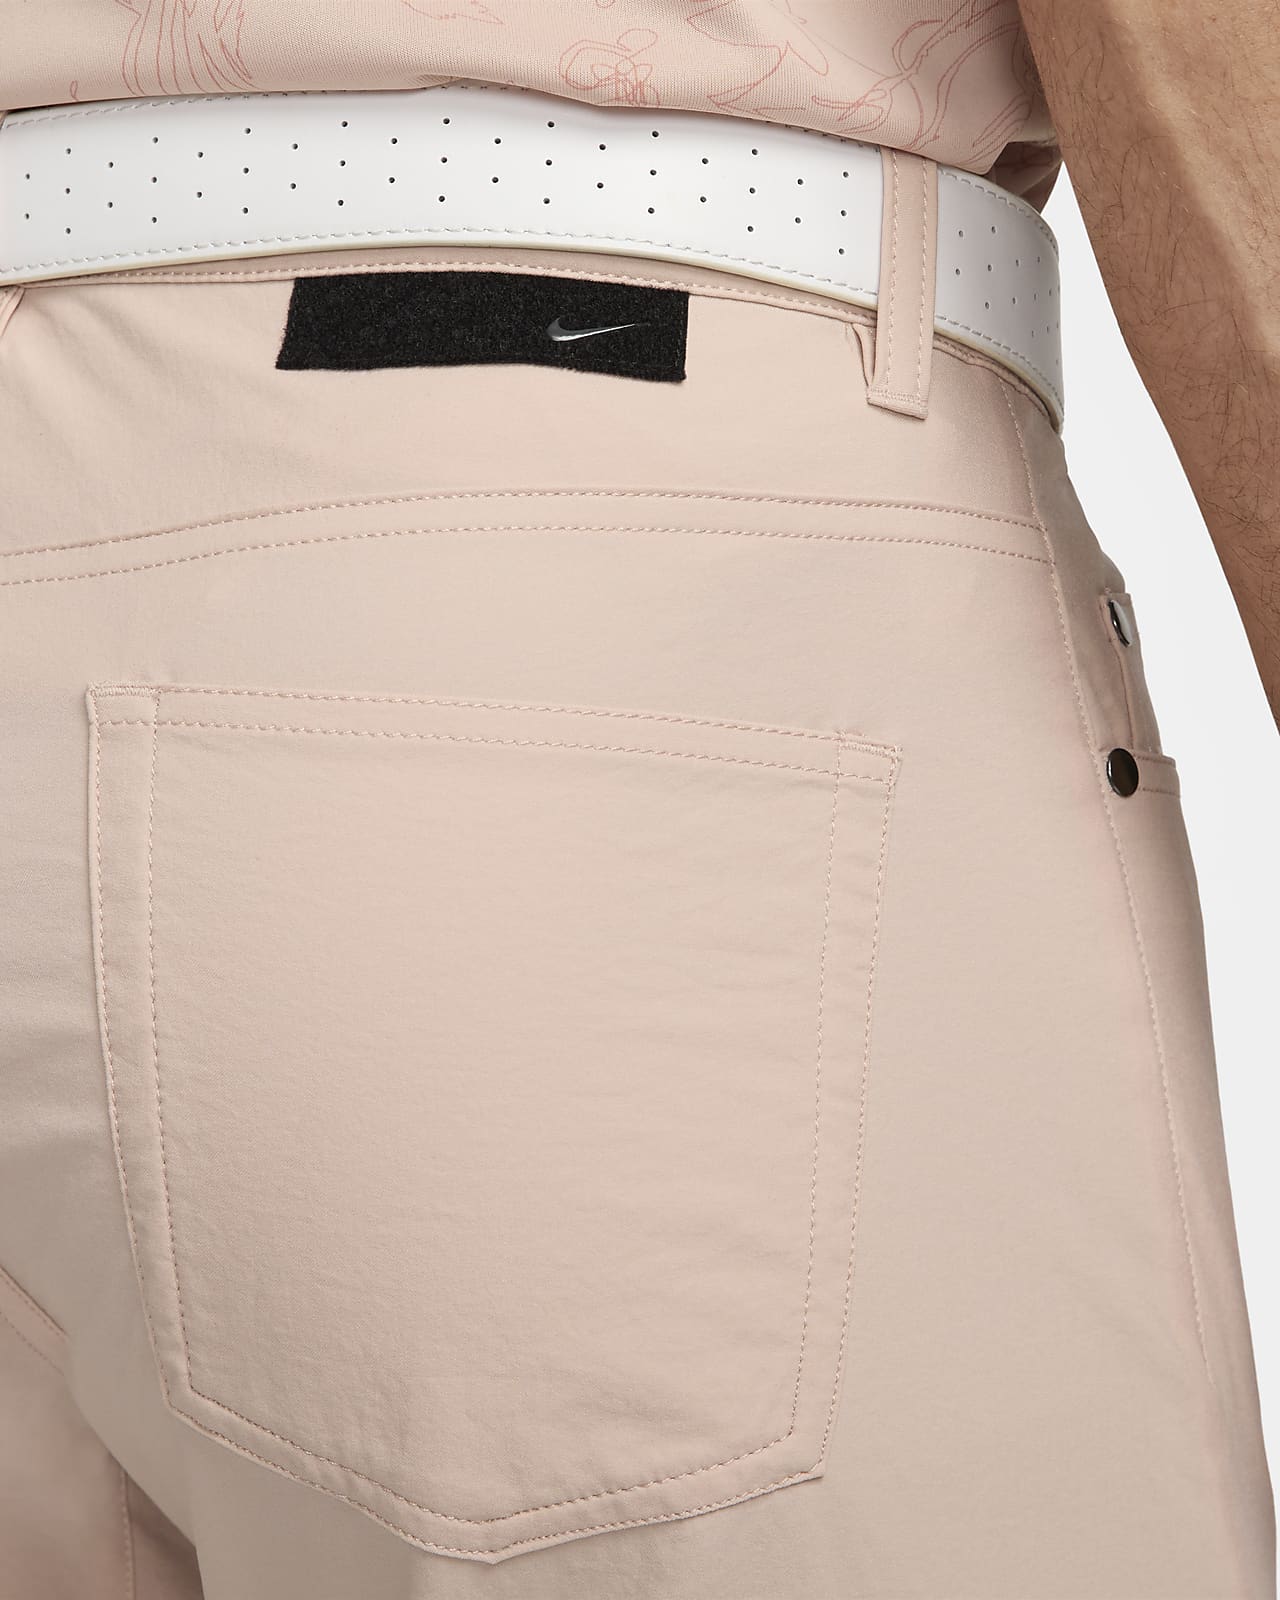 eGolf Megastore  Nike Womens Slim Fit Golf Trousers Pants  BlackBlack  Middle Easts Golf Retailer